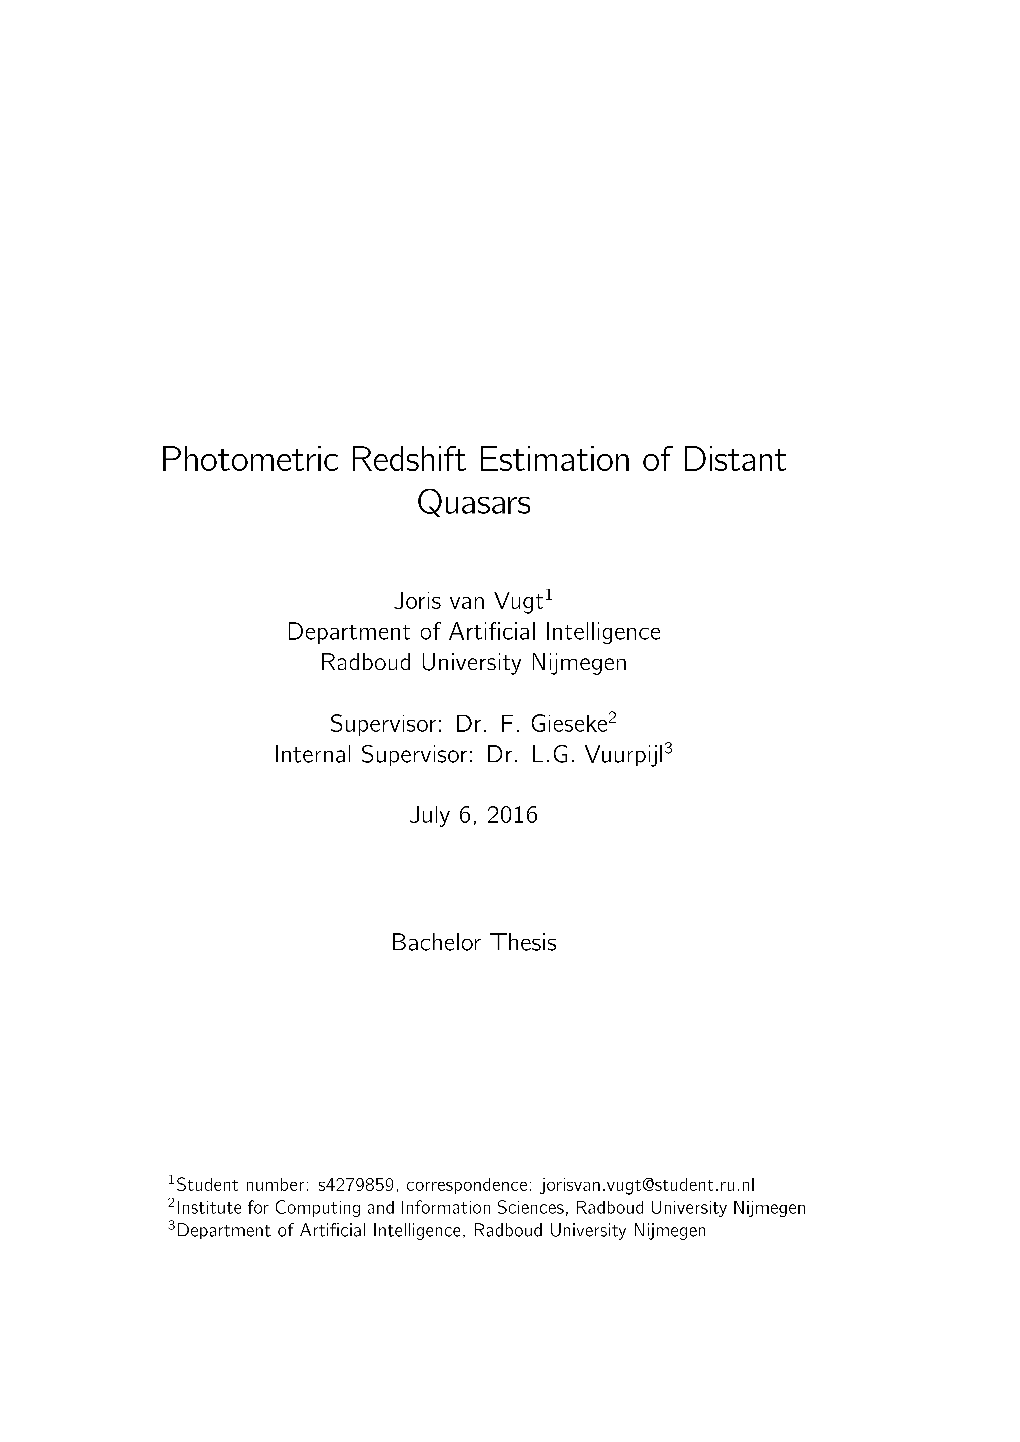 Photometric Redshift Estimation of Distant Quasars